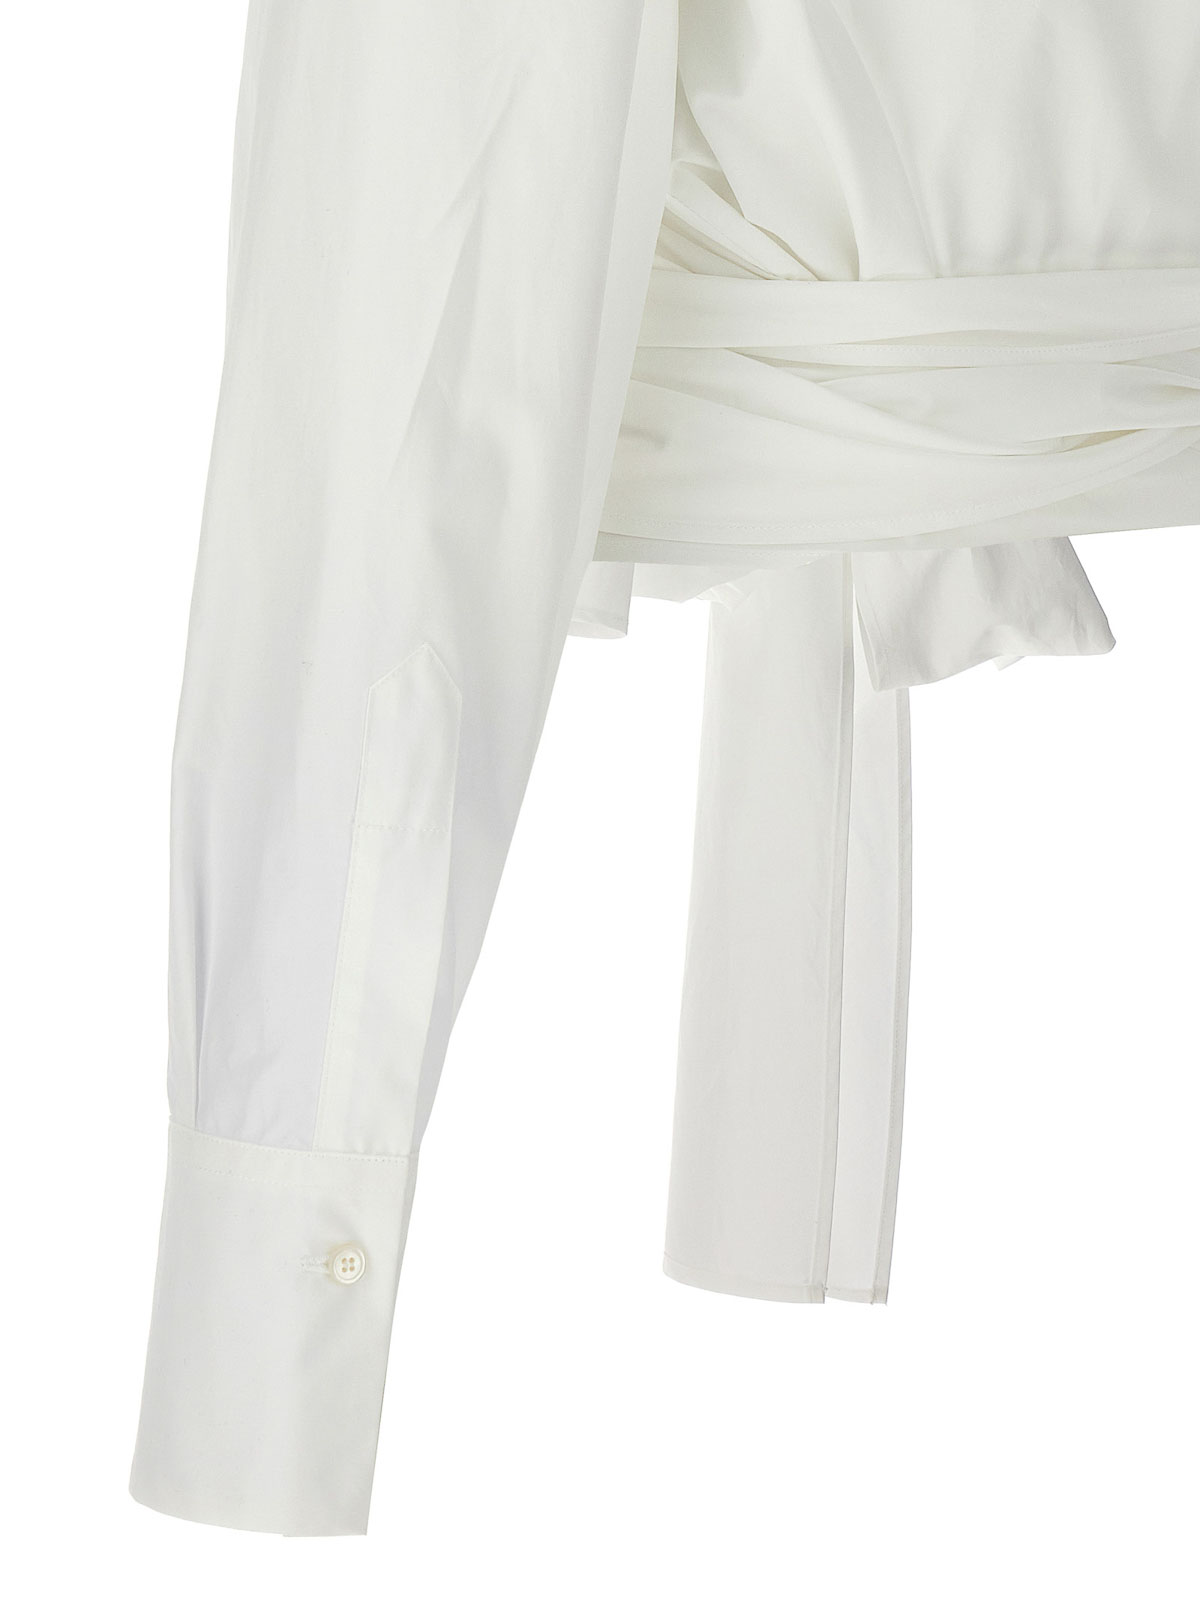 Shop Fabiana Filippi Cotton Popline Shirt In Blanco